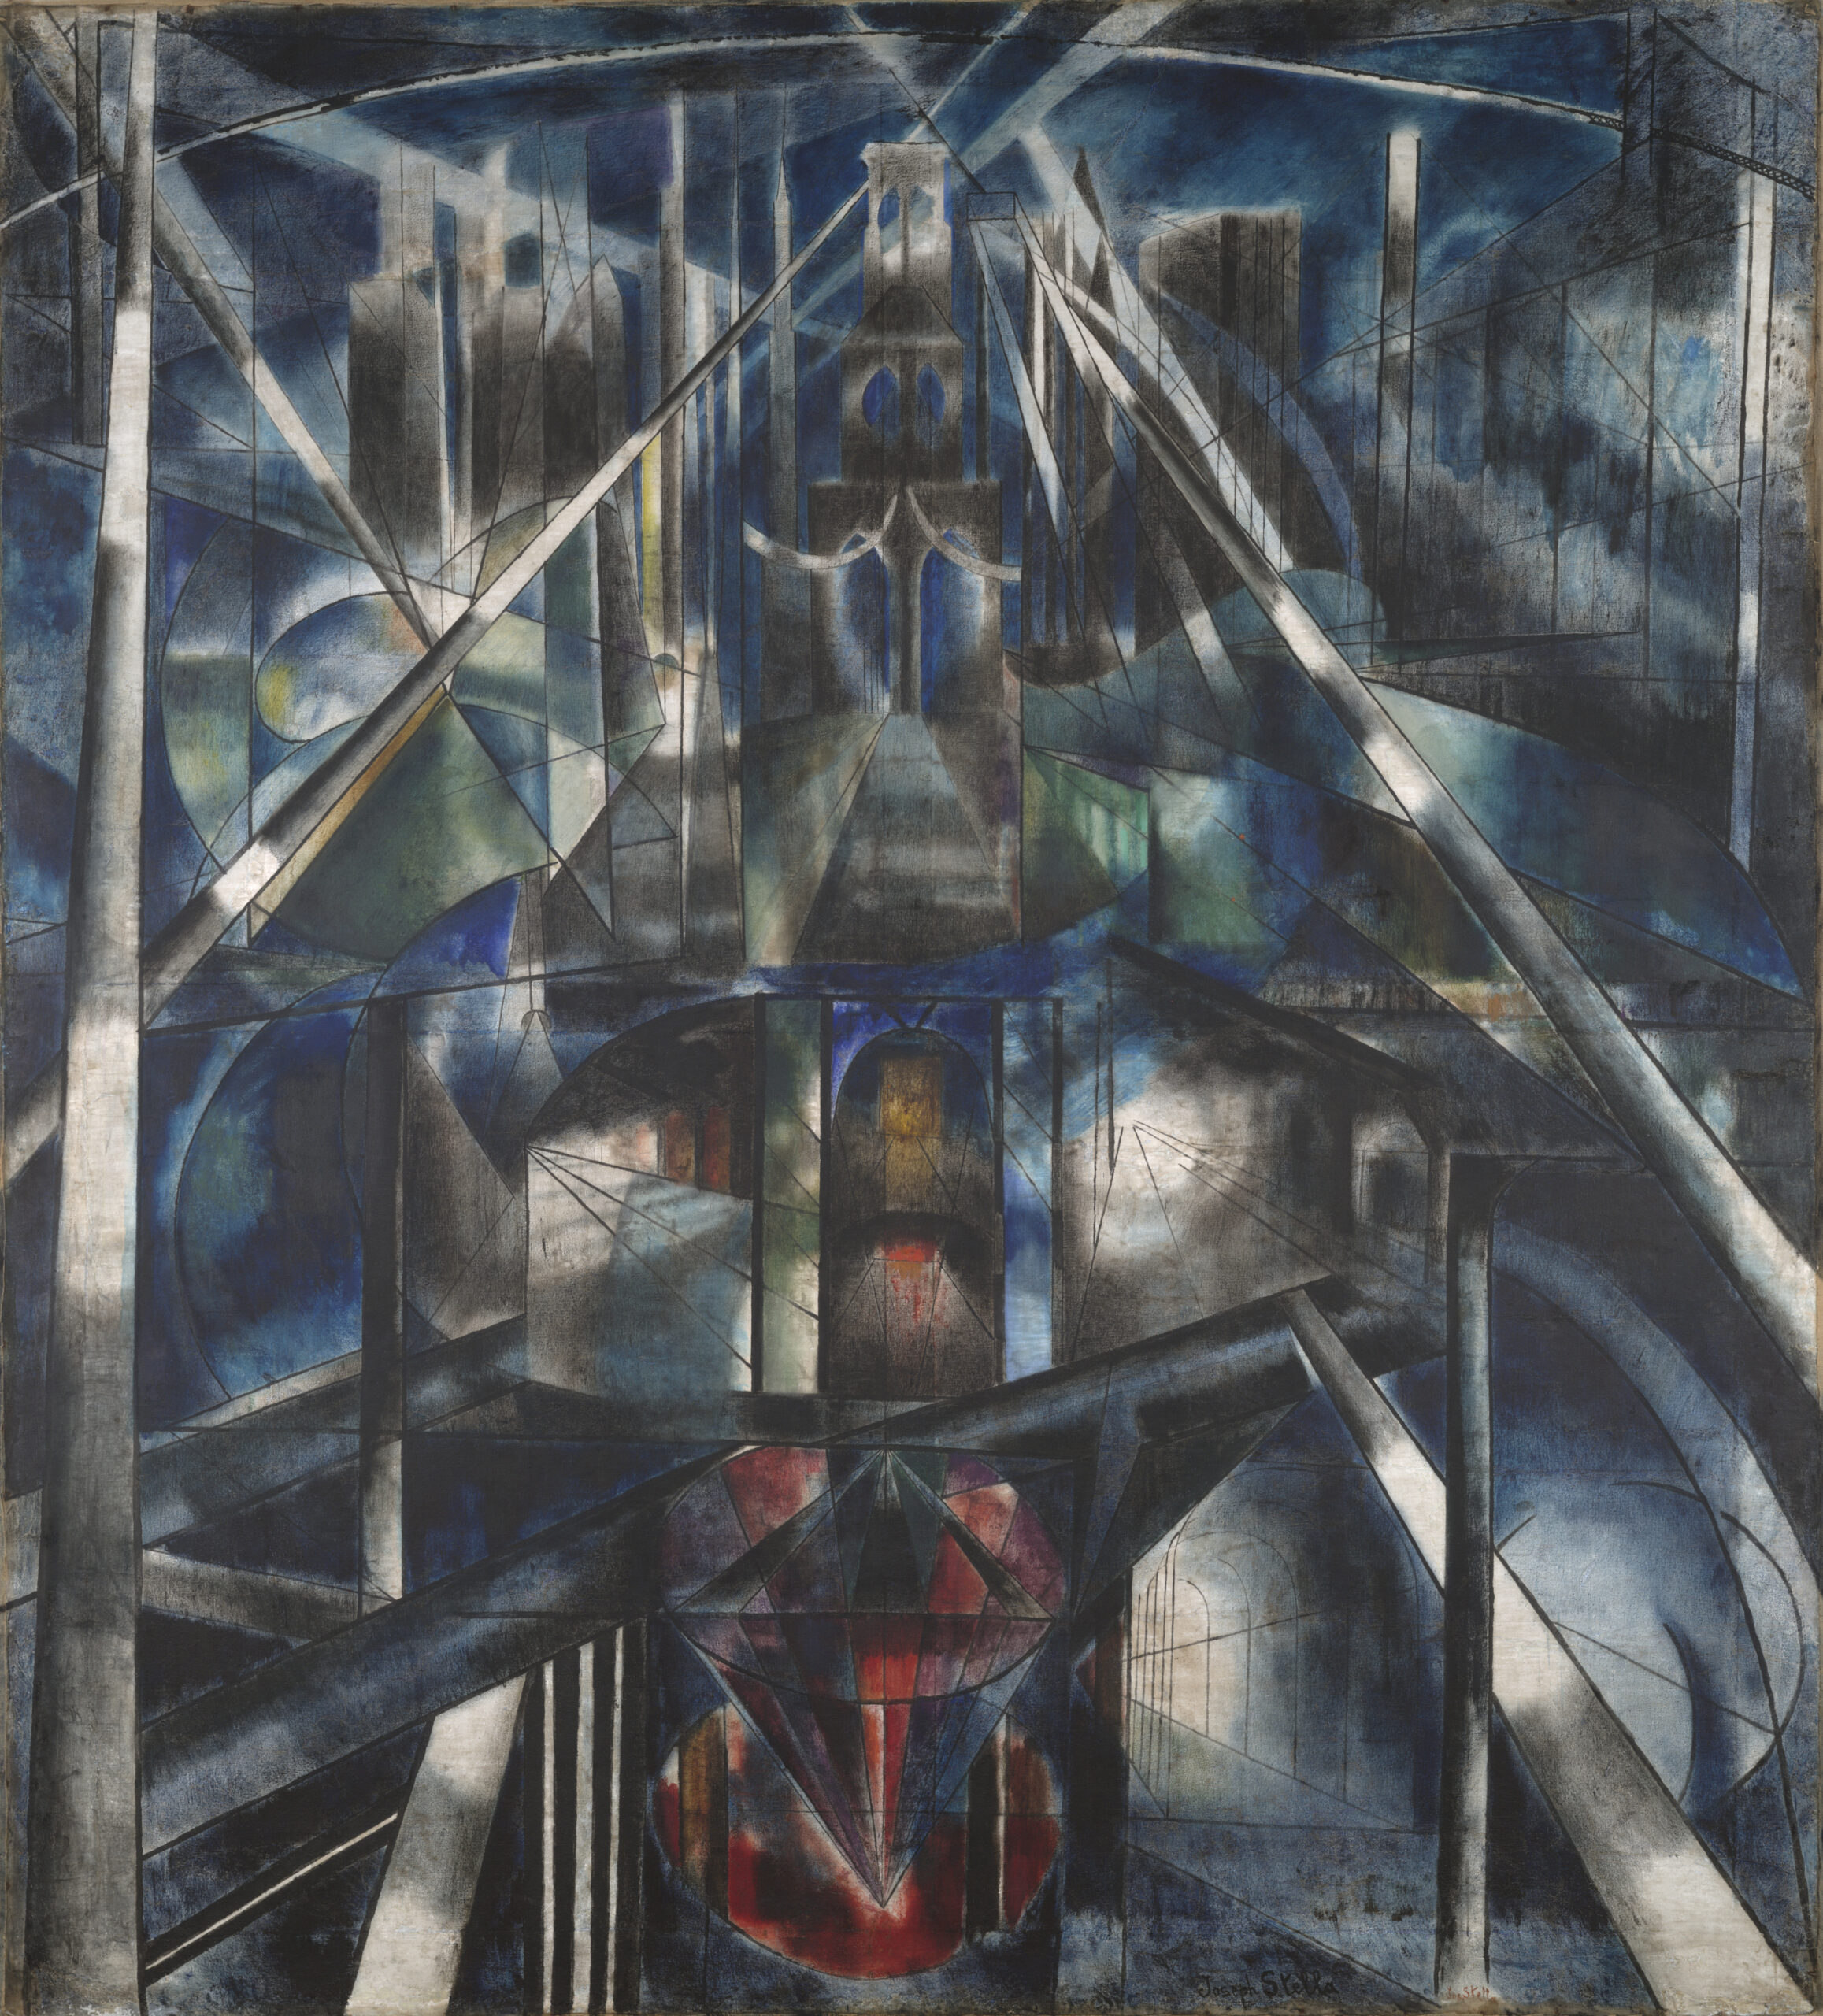 Joseph Stella, Brooklyn Bridge, 1919 - 1920, oil on canvas, 215.3 × 194.6 cm, Yale University Art Gallery, New Haven